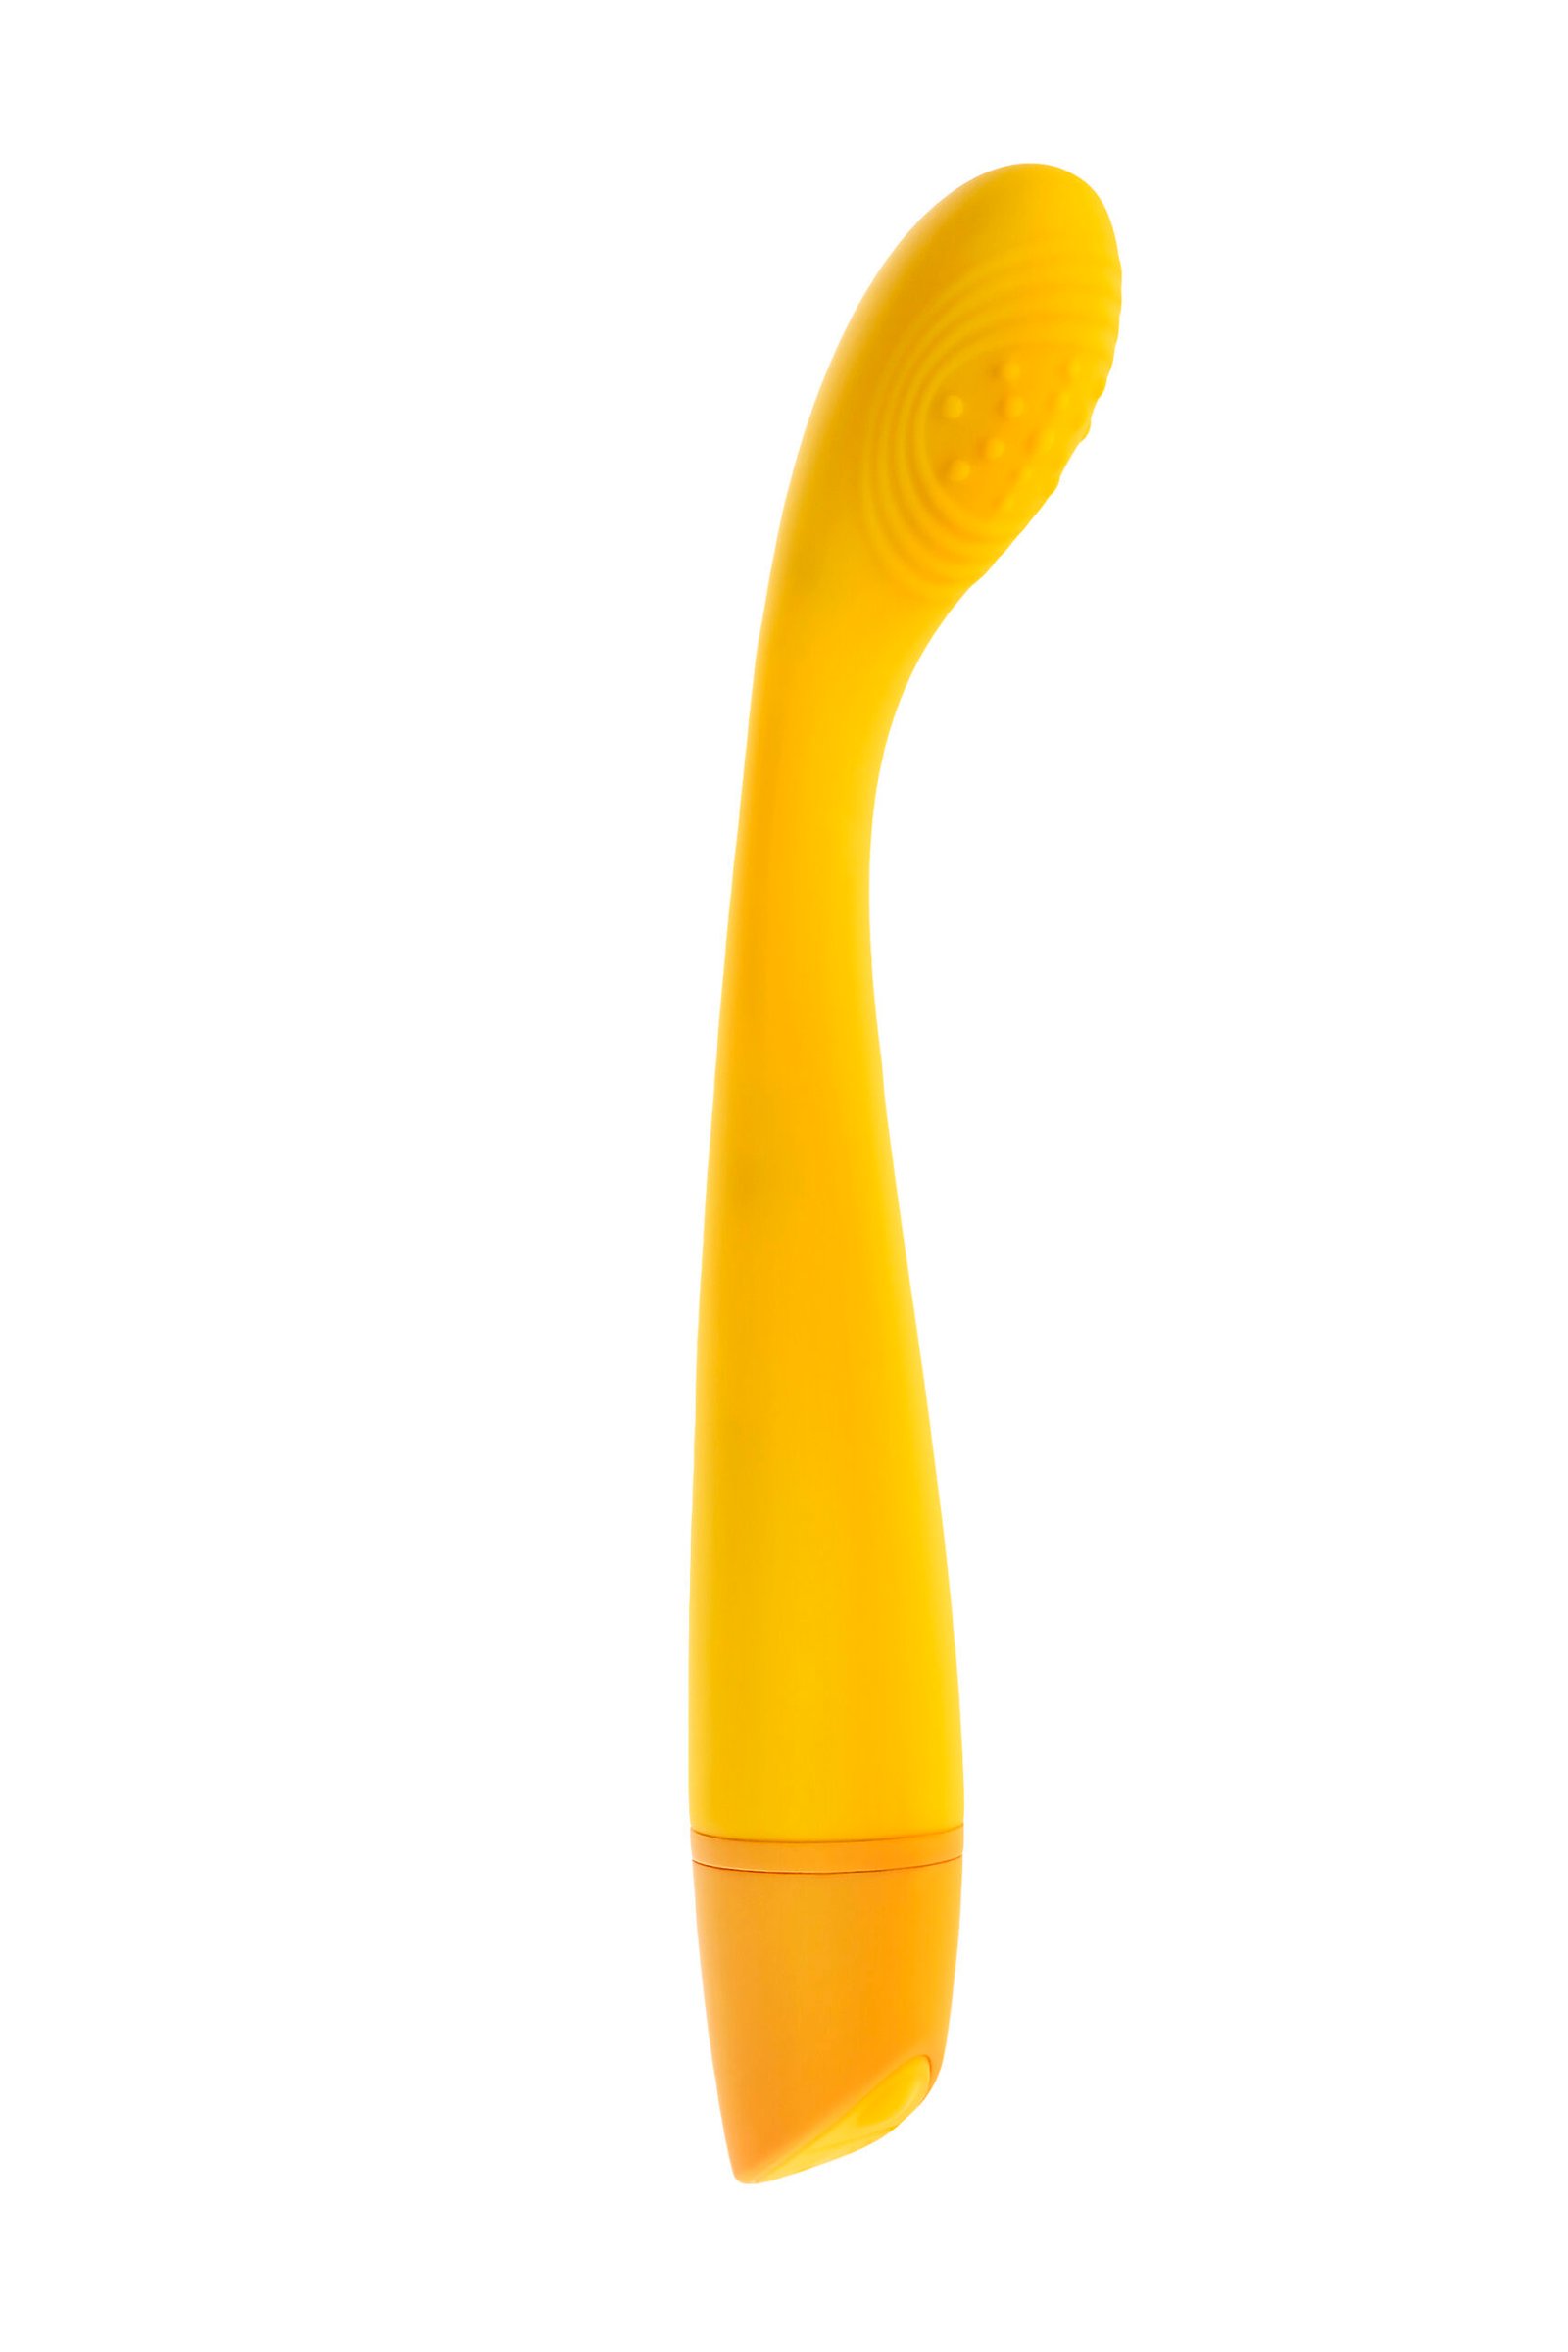 Selopa - Lemon Squeeze - Flexibele G-spot vibrator